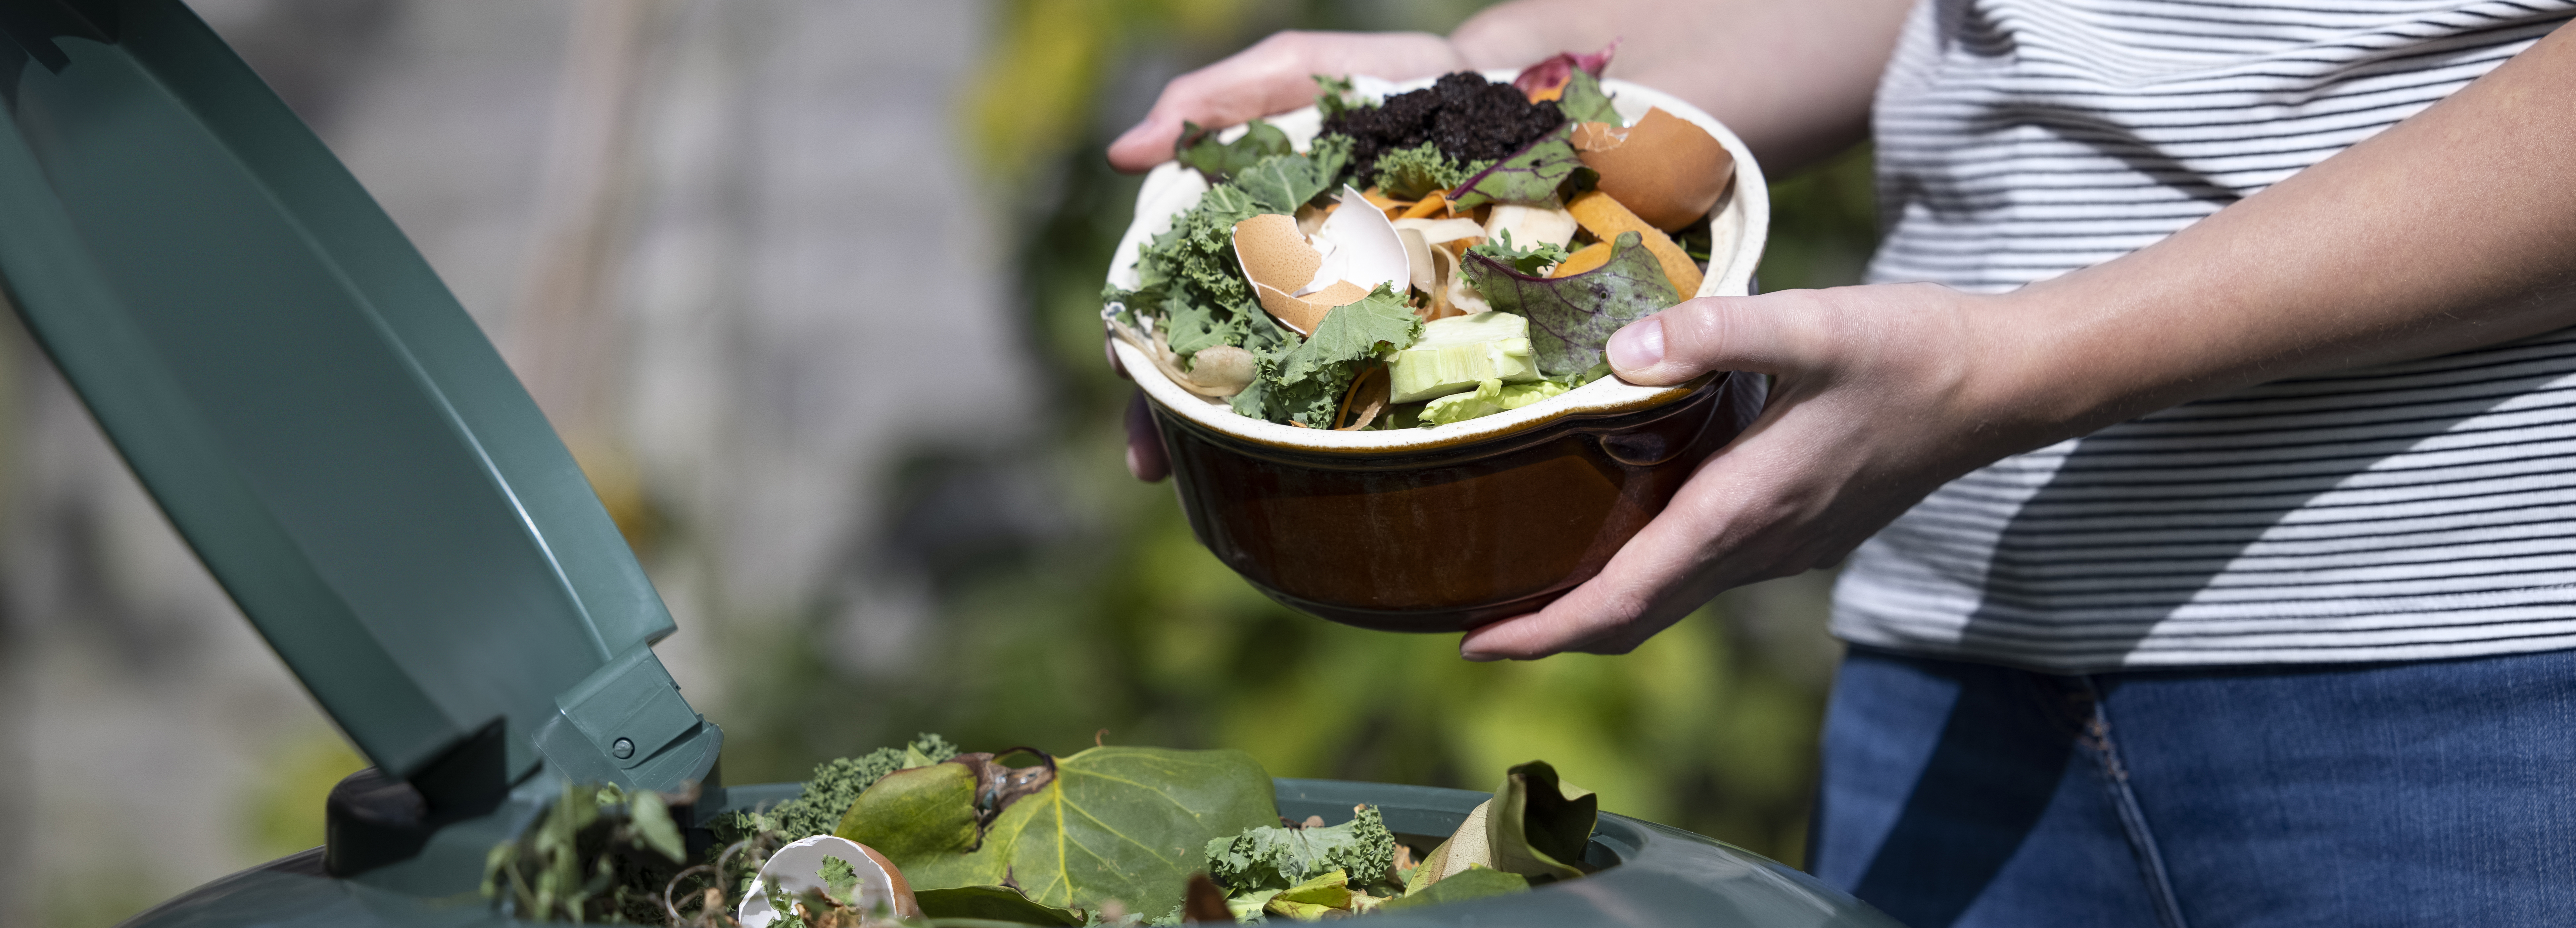 food waste compost